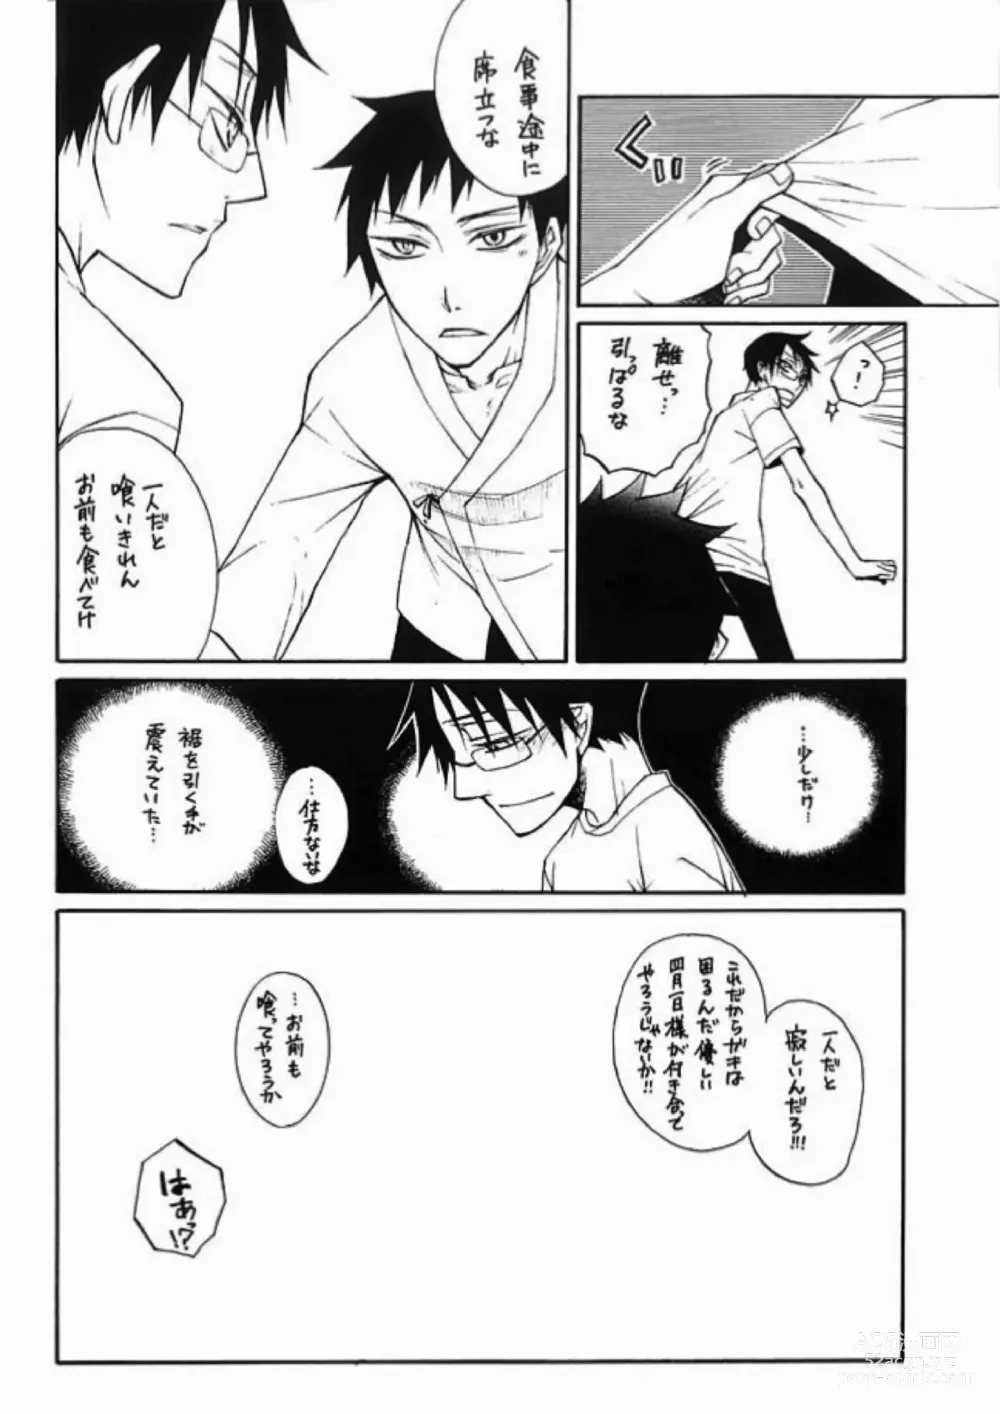 Page 5 of doujinshi HELP!